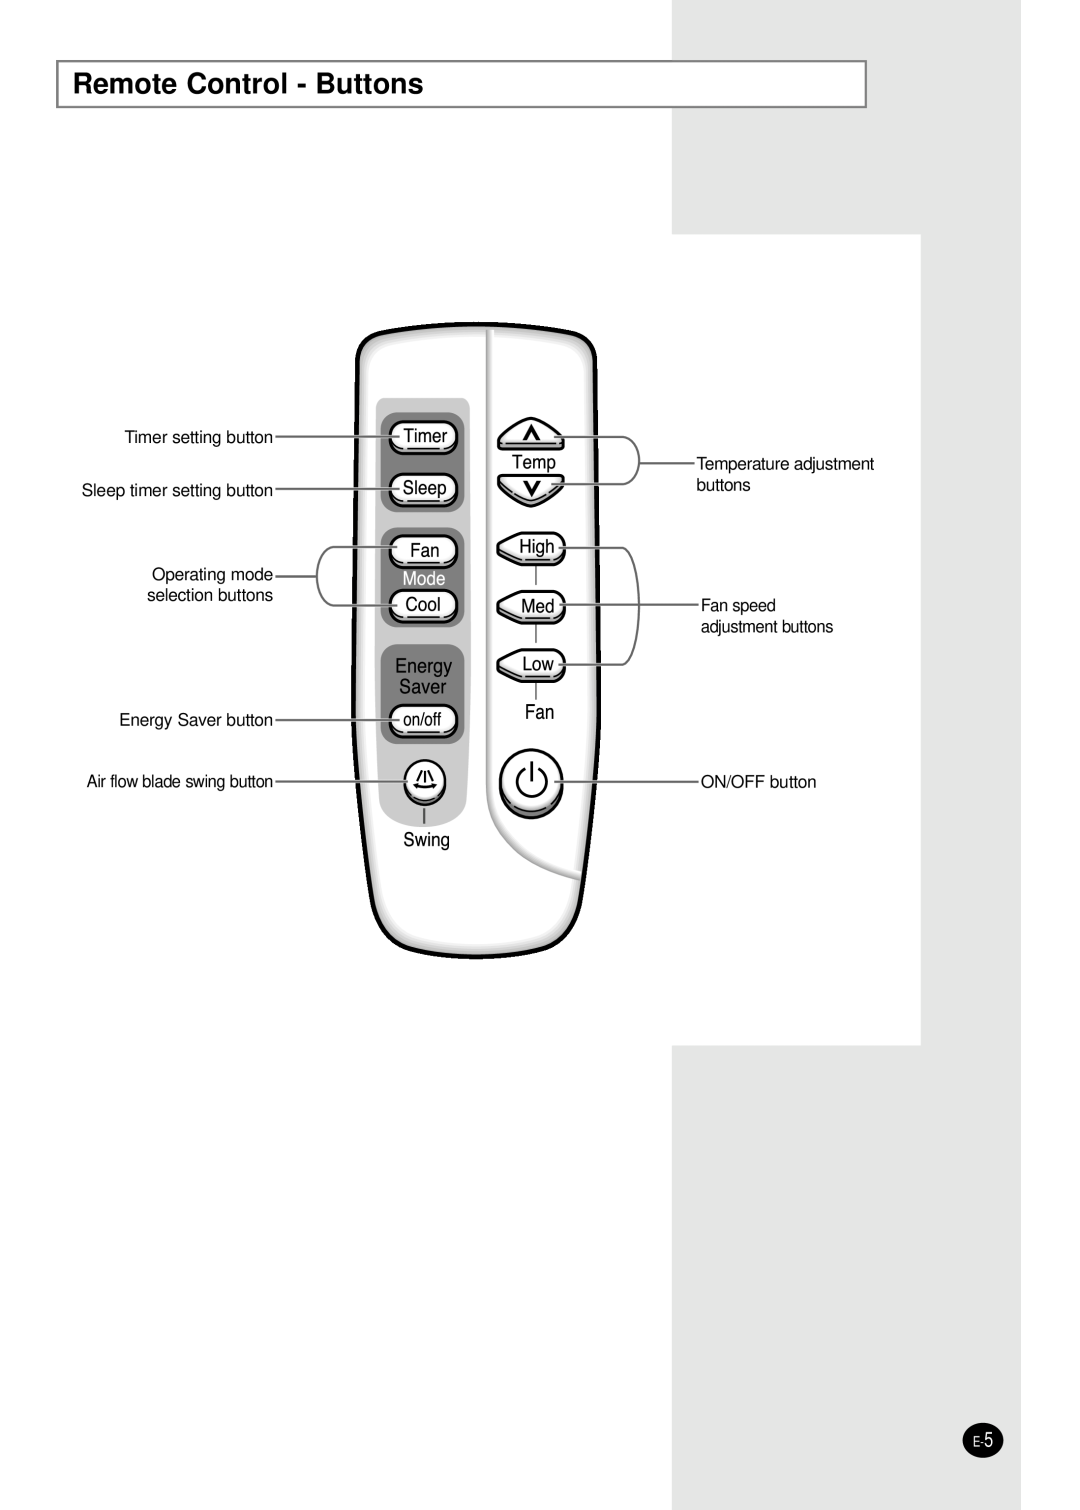 Samsung Model AW089AB manual Remote Control - Buttons, Timer setting button Sleep timer setting button 